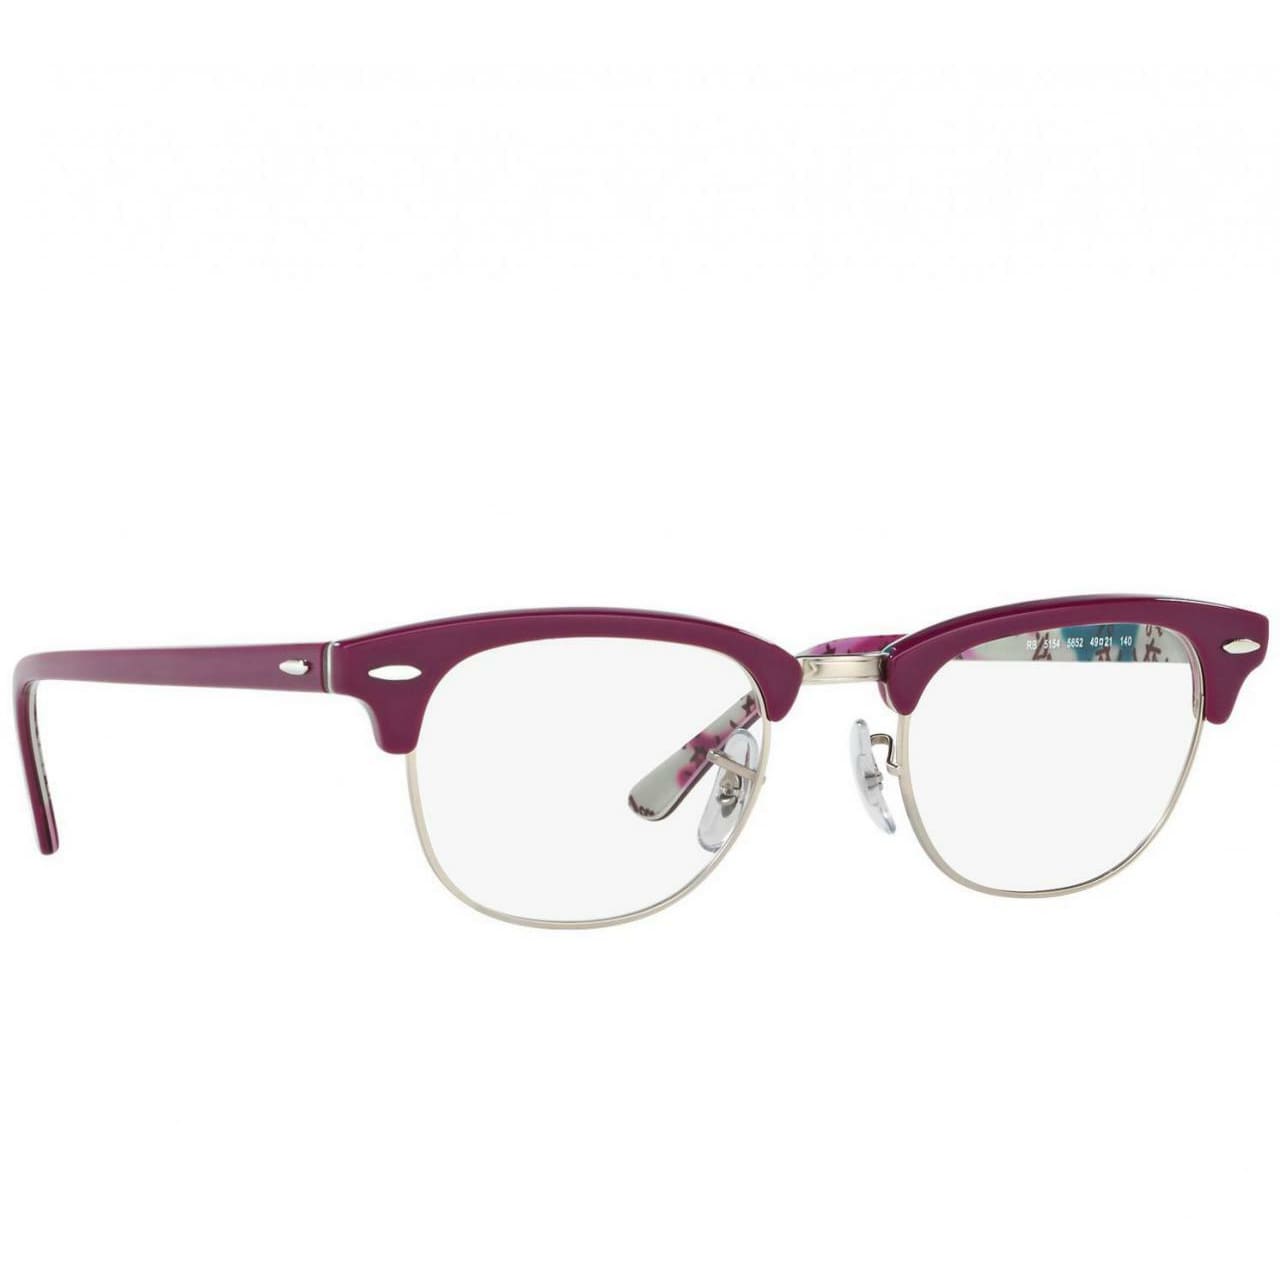 Ray-Ban RB5154 5652 Clubmaster Optics Violet Semi Full Rim Square Eyeglasses Frames 8053672616729